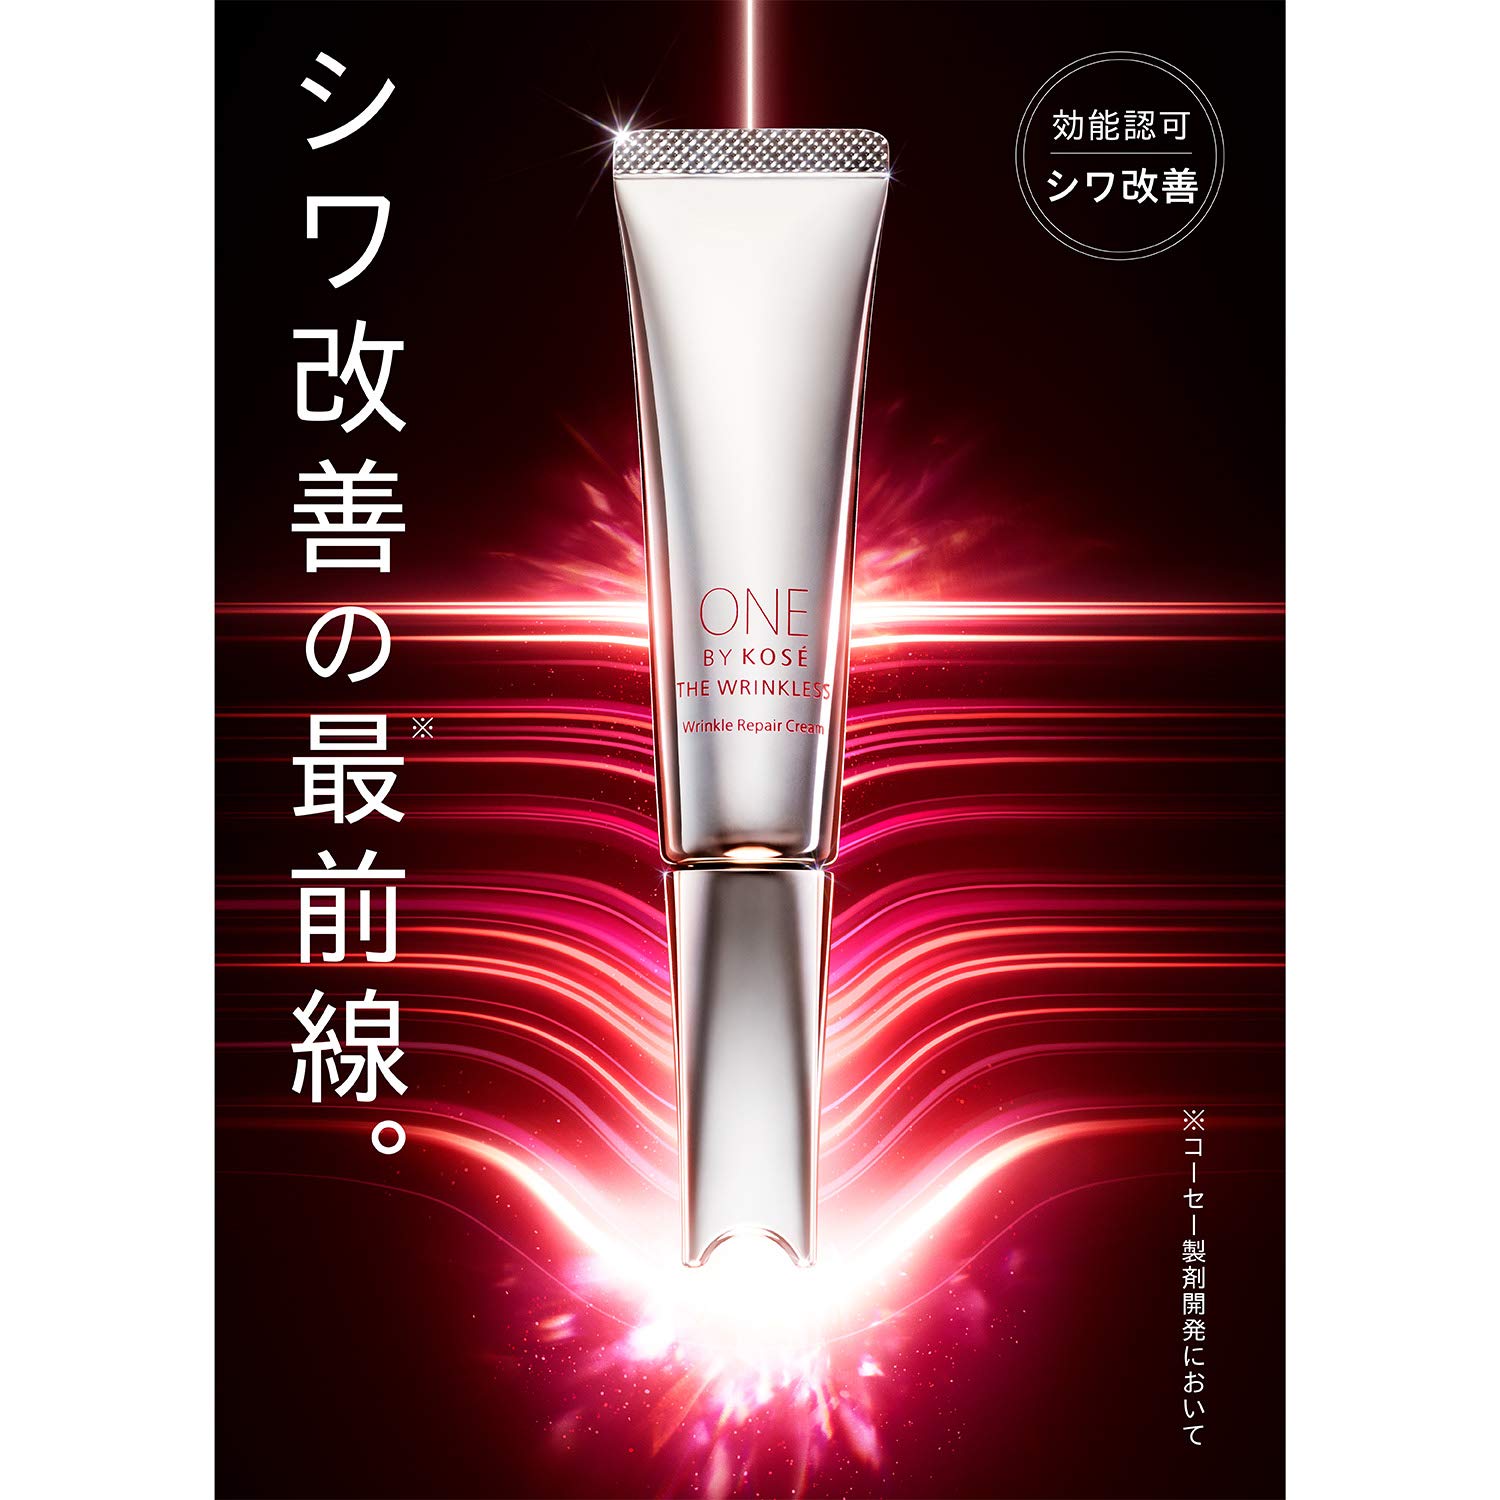 Dhc Dense Moisturized Skin Medicinal Whitening Lotion 180ml - Lotion From Japan - YOYO JAPAN